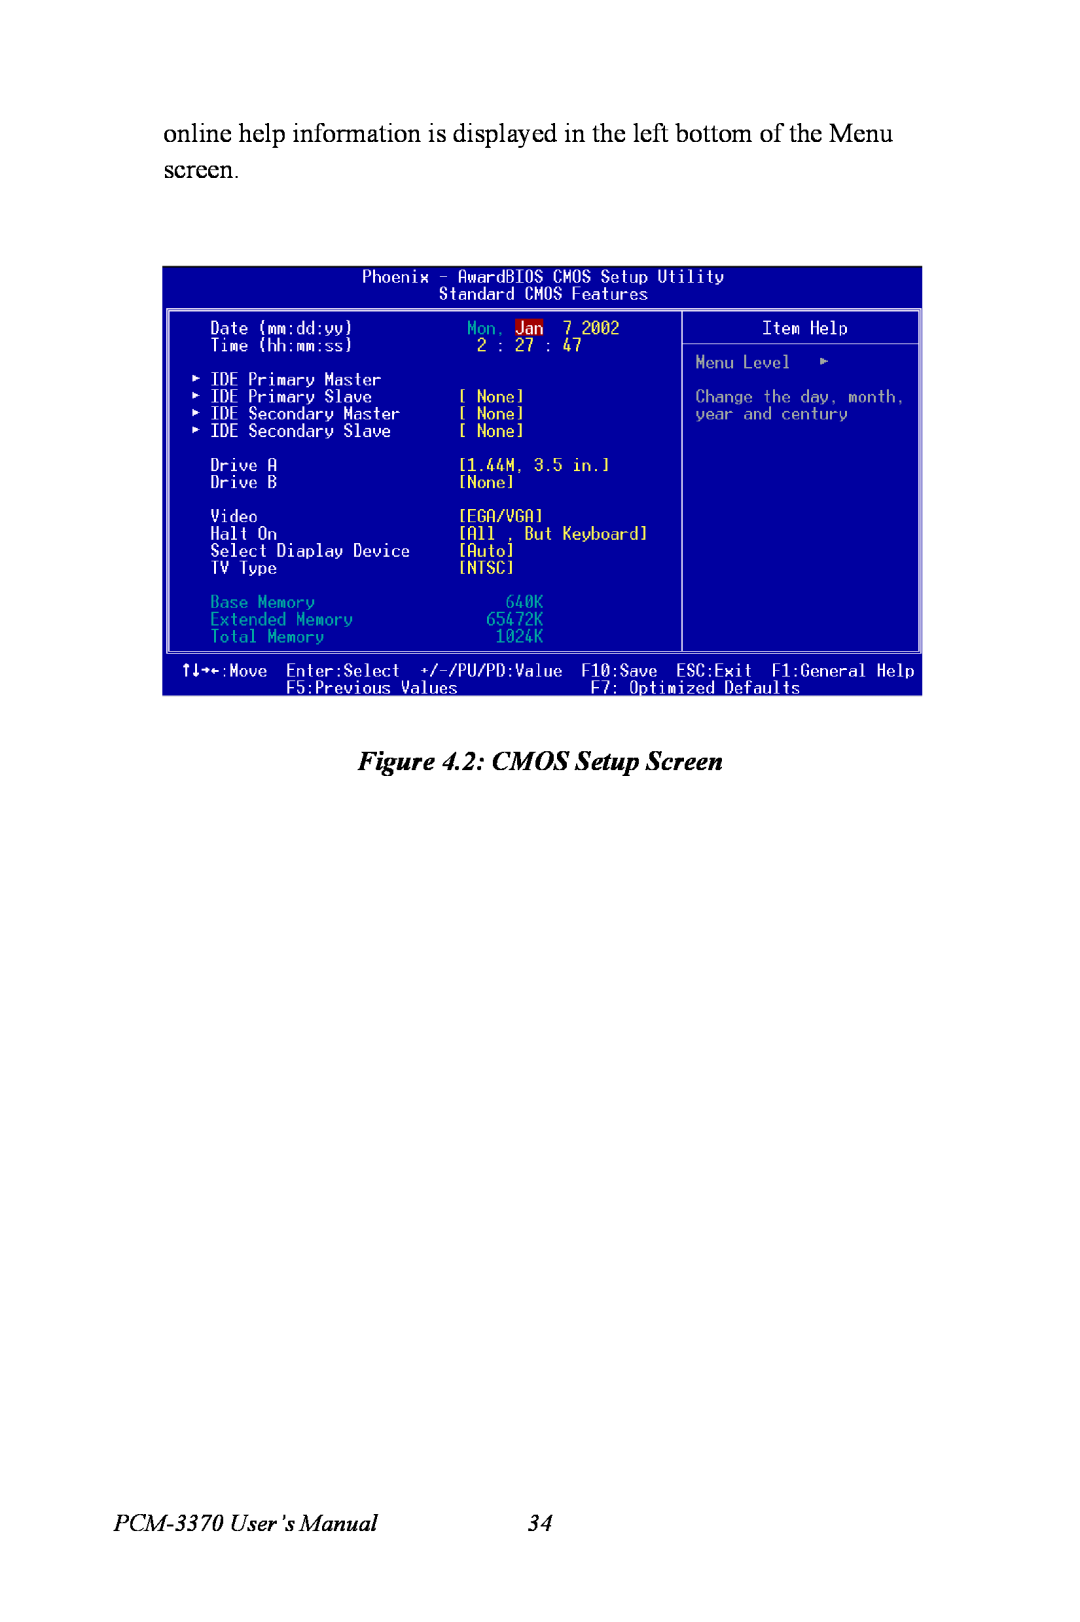 Intel user manual 2 CMOS Setup Screen, PCM-3370 User’s Manual 